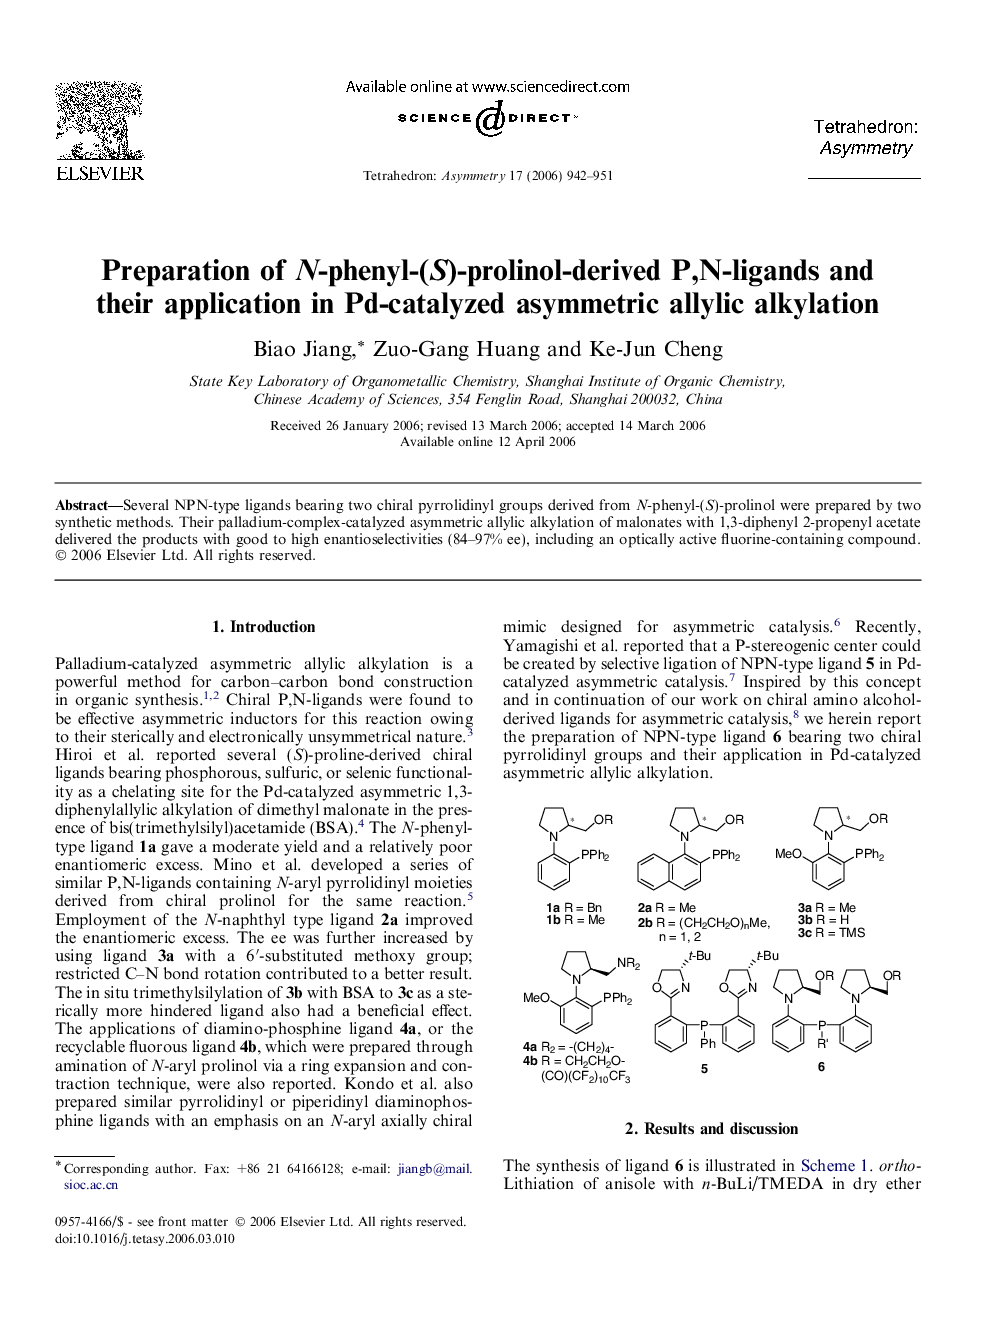 Preparation of N-phenyl-(S)-prolinol-derived P,N-ligands and their application in Pd-catalyzed asymmetric allylic alkylation